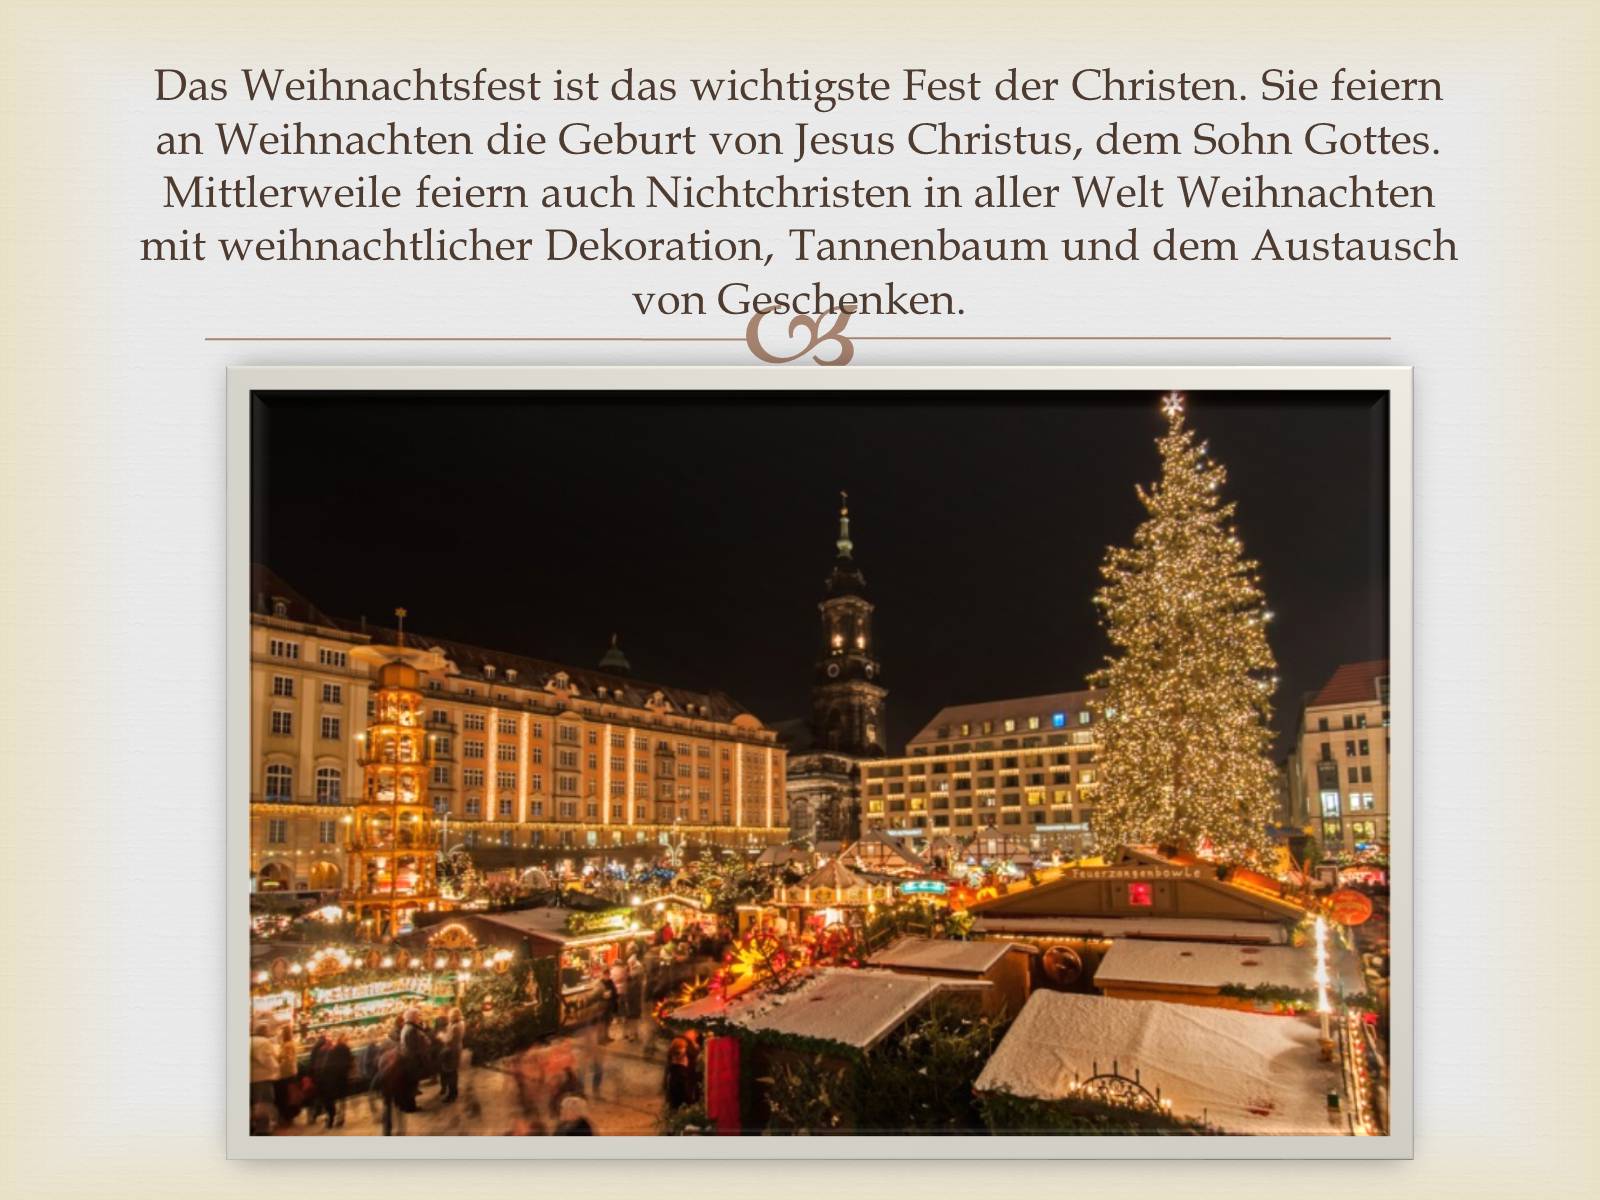 Презентація на тему «Weihnachten in Deutschland» (варіант 1) - Слайд #2